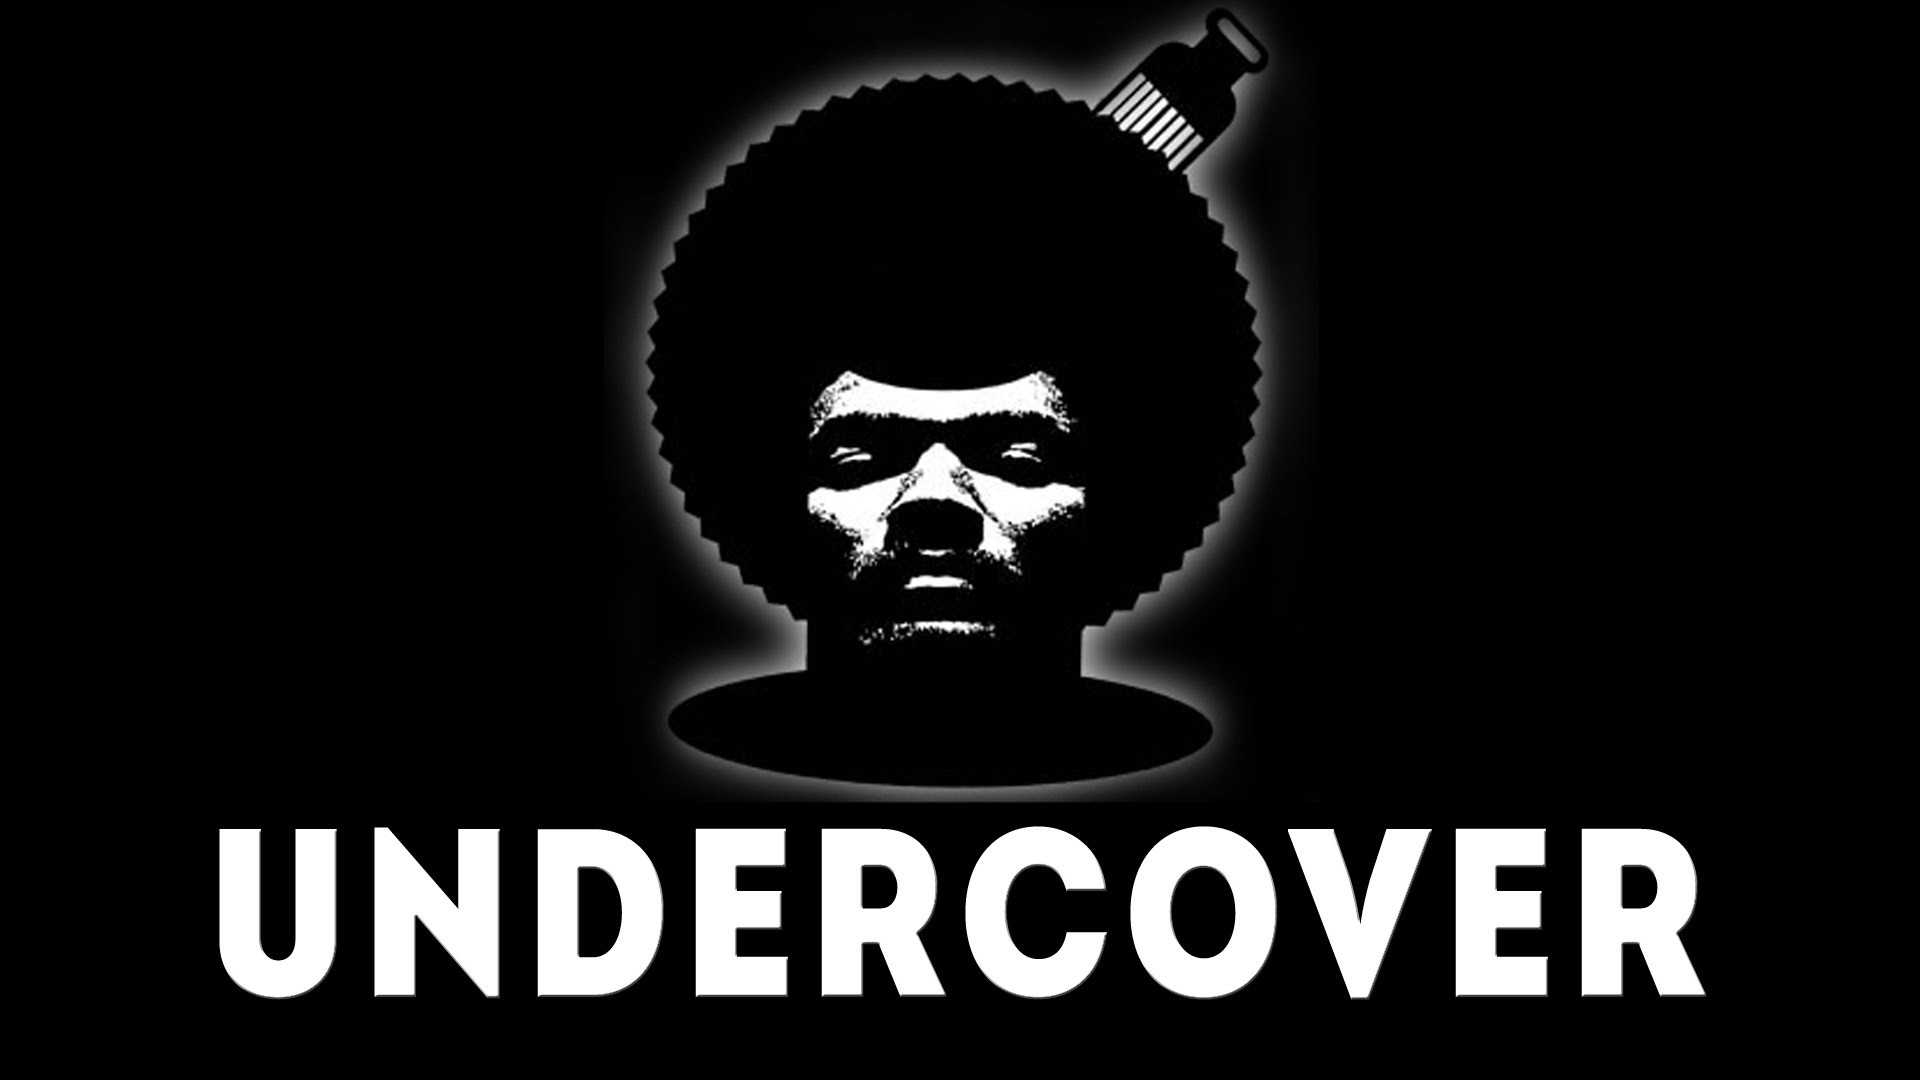 UNDERCOVER Pete Rock Sample ReFlip Old School Hip Hop Style Beat Raw Instrumental Rap Type – YouTube